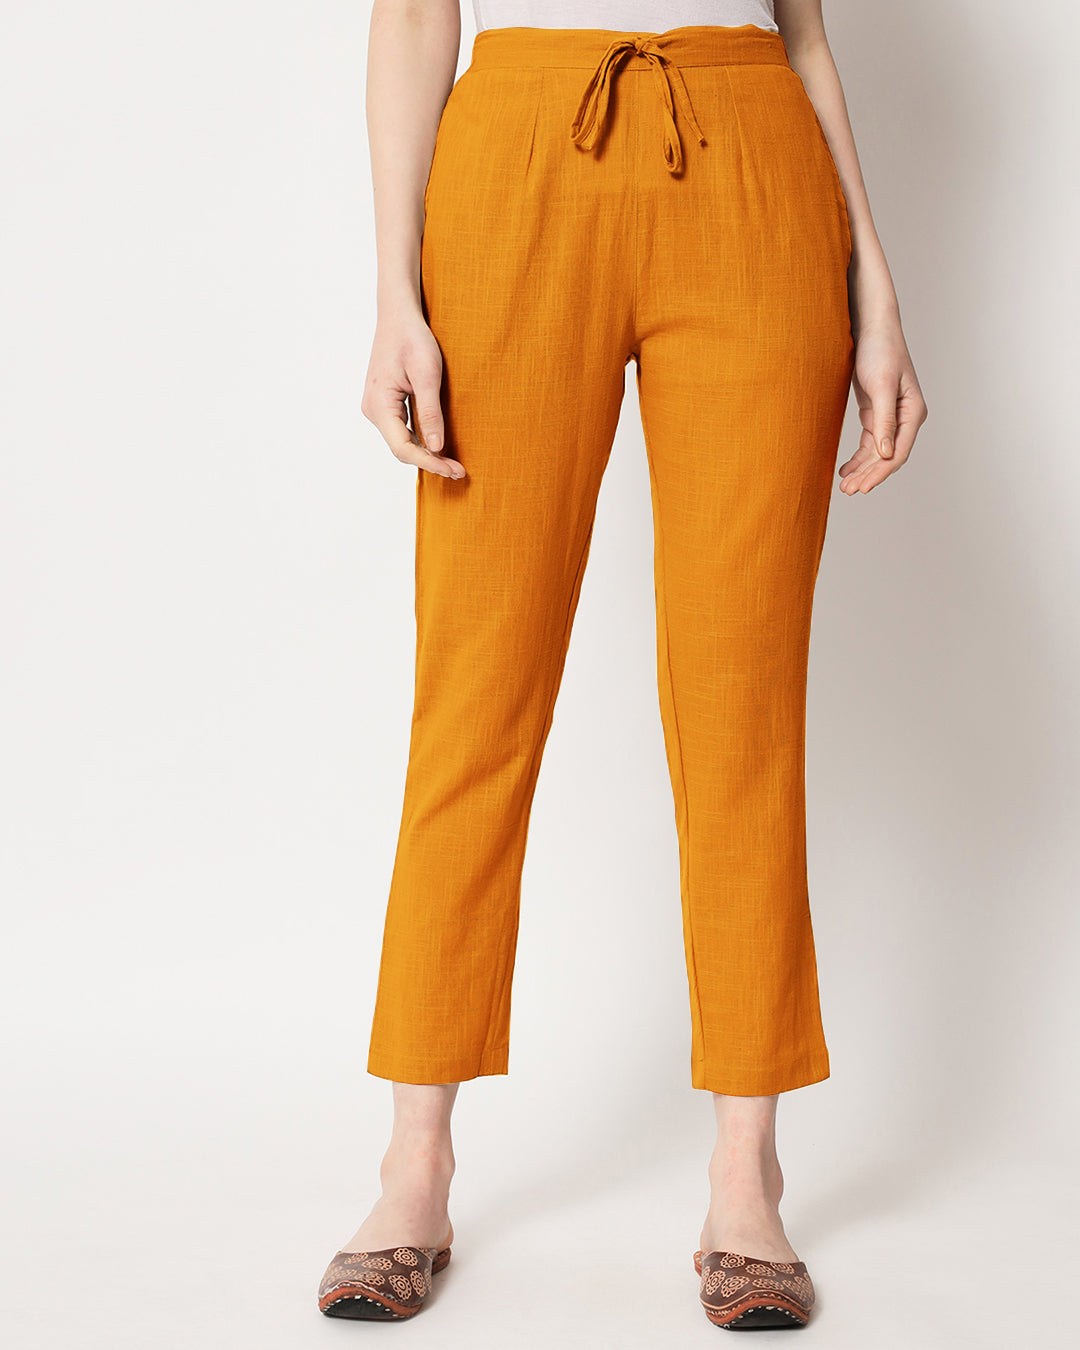 Combo: Lilac & Happy Orange Cigarette Pants- Set of 2